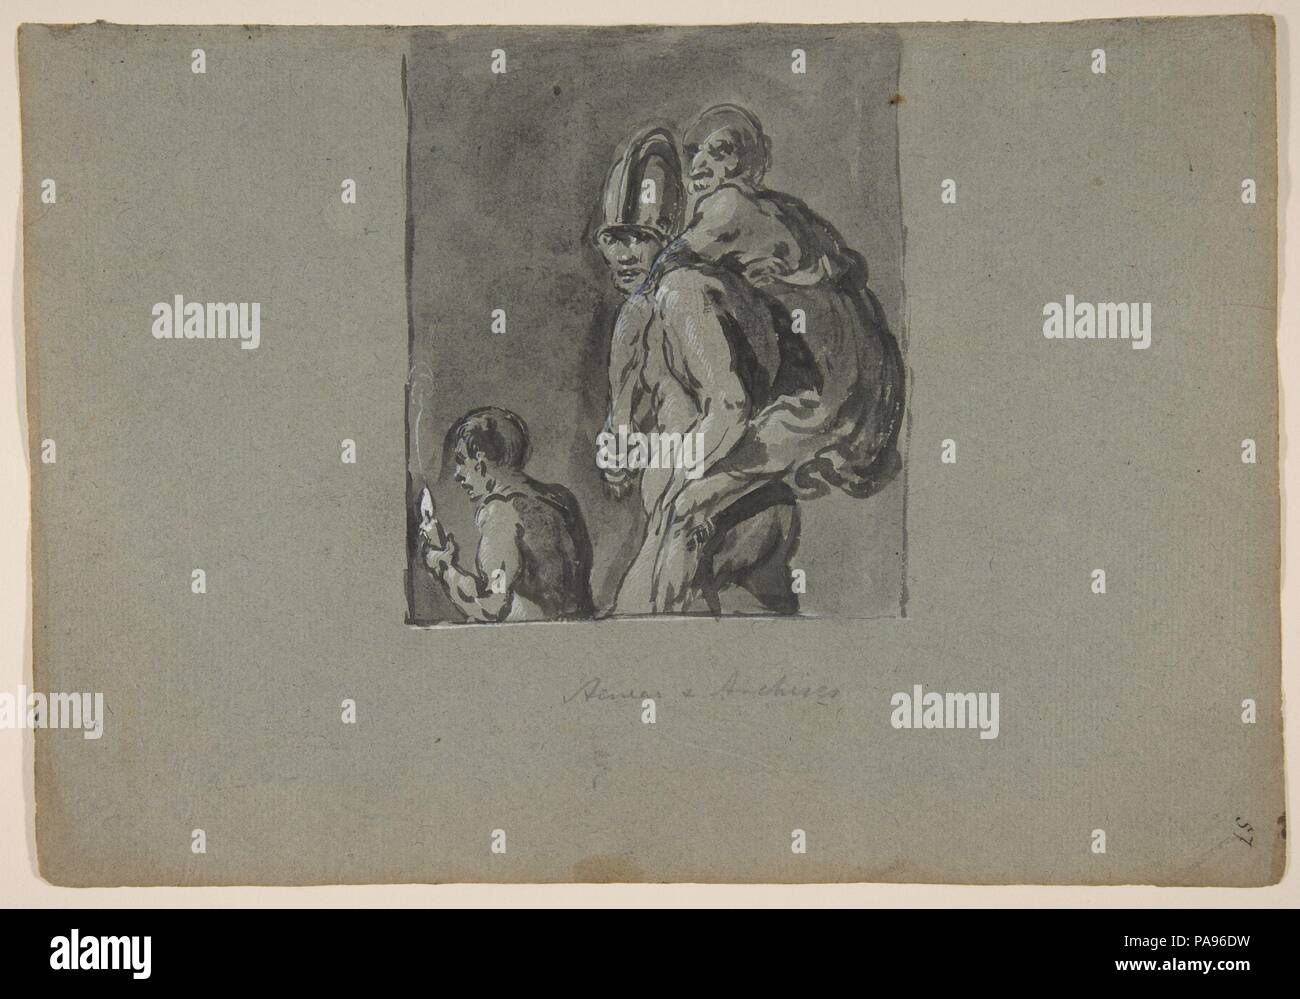 Aeneas and Anchises. Artist: Leonaert Bramer (Dutch, Delft 1596-1674 Delft). Dimensions: sheet: 8 1/4 x 11 13/16 in. (21 x 30 cm). Date: 1611-74. Museum: Metropolitan Museum of Art, New York, USA. Stock Photo